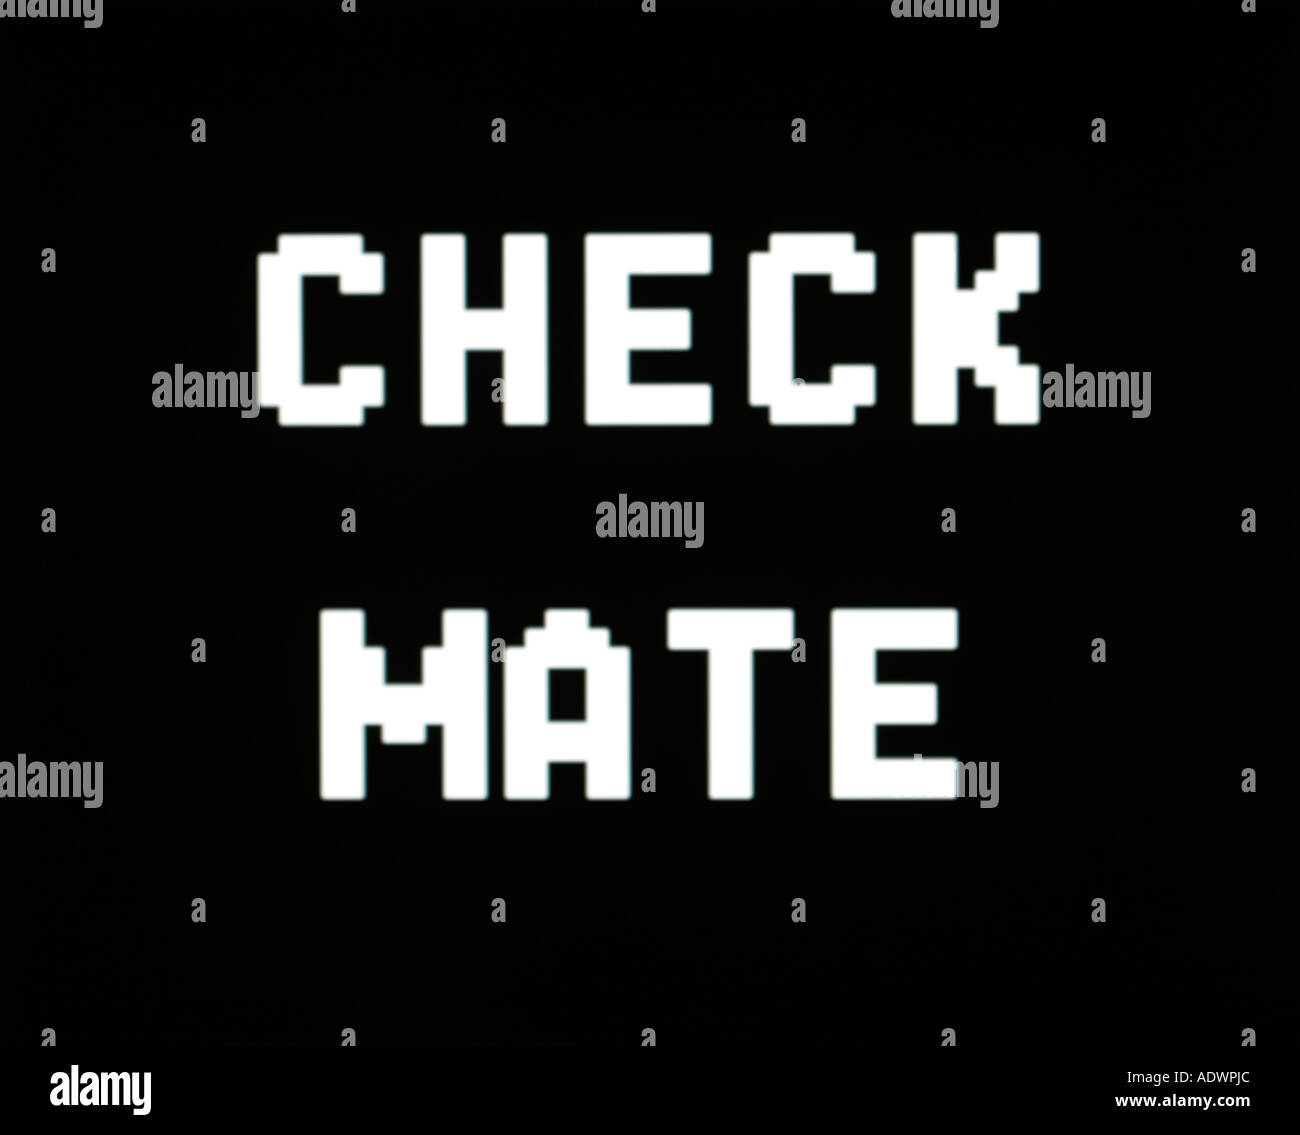 Check Mate (Taito do Brasil - 1977) 